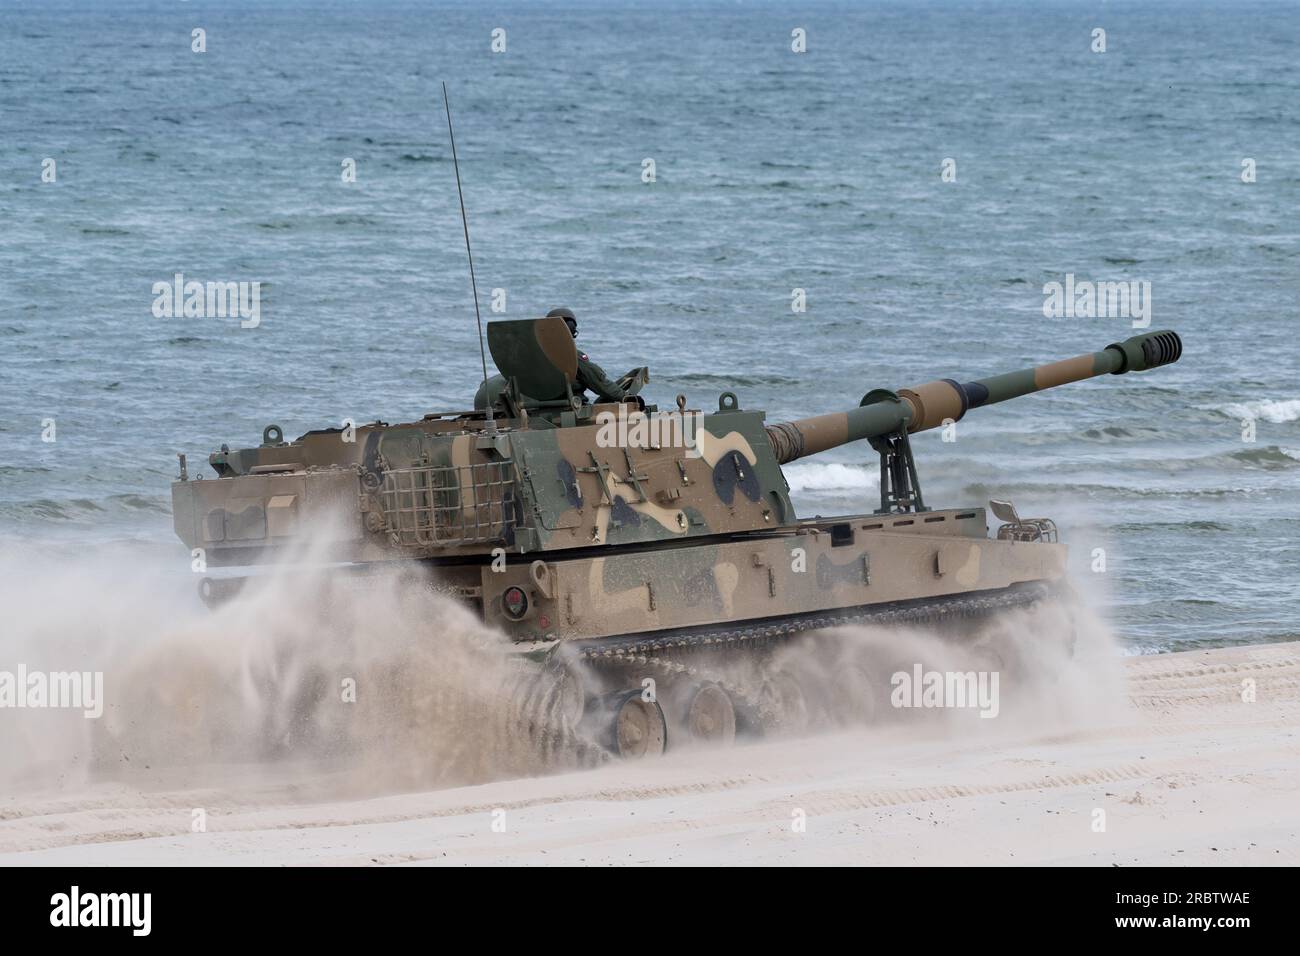 South Korea`s K9 Thunder gun-howitzers of the Polish Armed Forces© Wojciech Strozyk / Alamy Stock Photo *** Local Caption *** Stock Photo